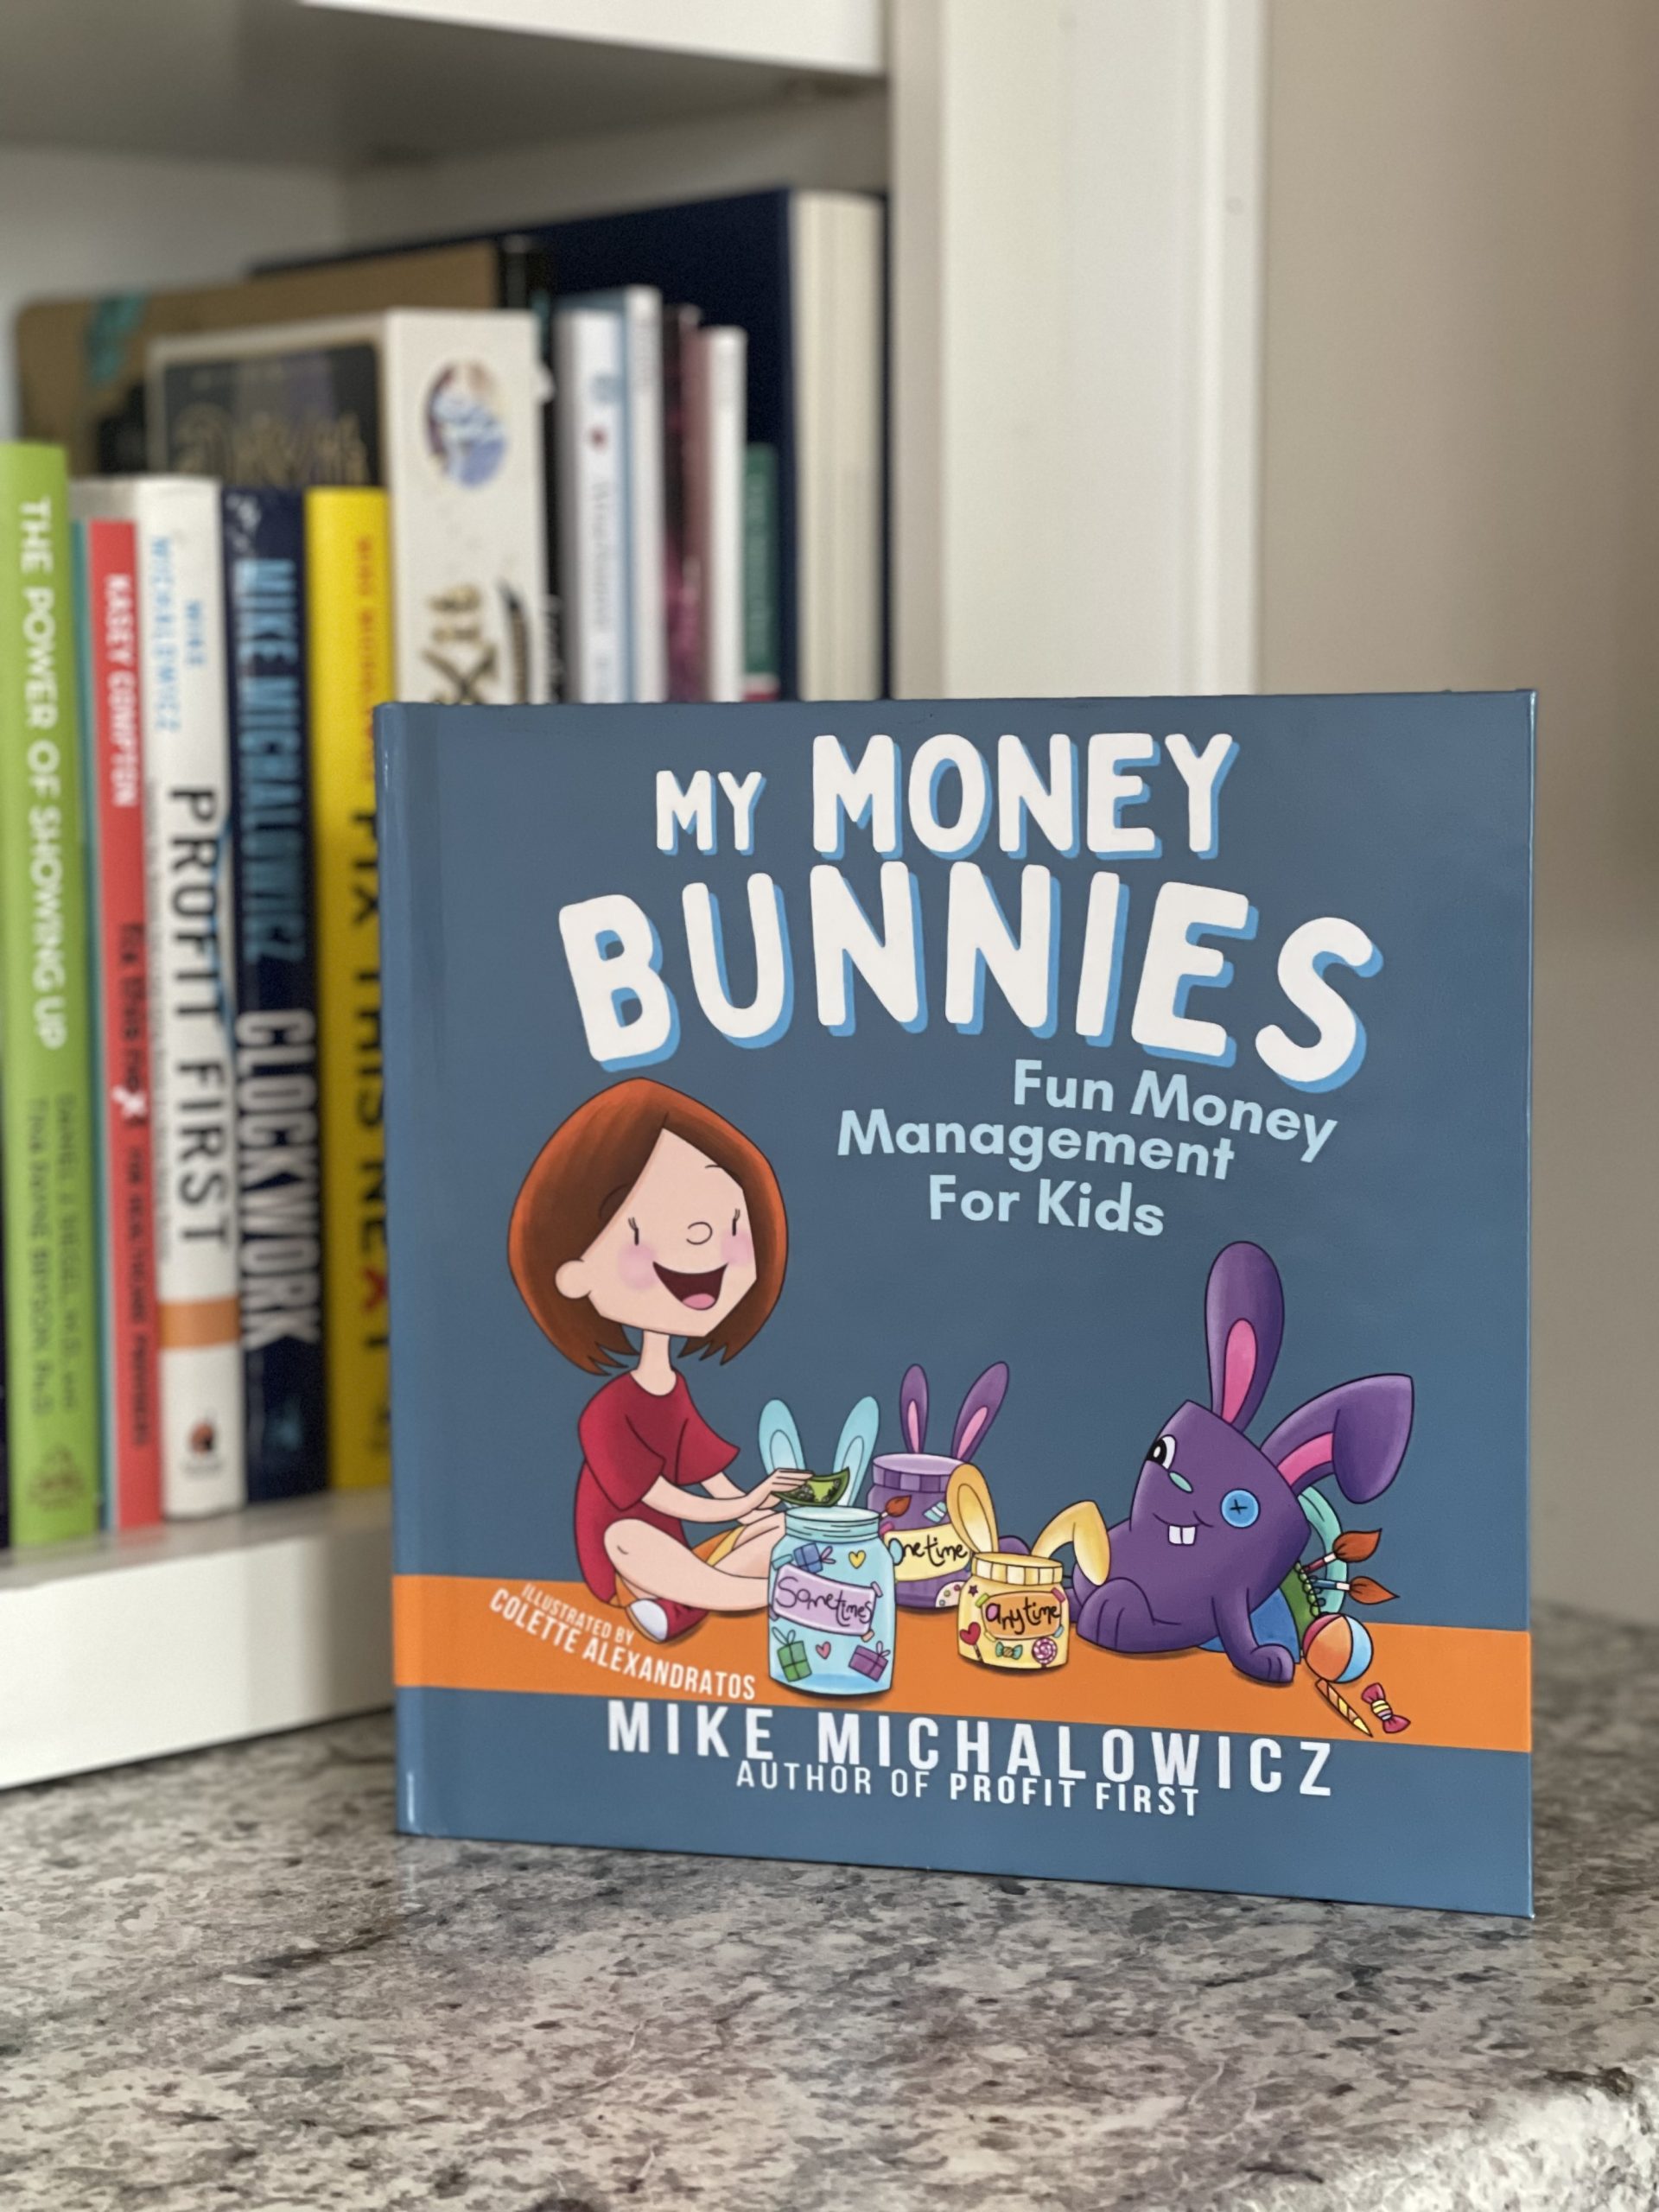 Bookshelf: “My Money Bunnies: Fun Money Management For Kids”